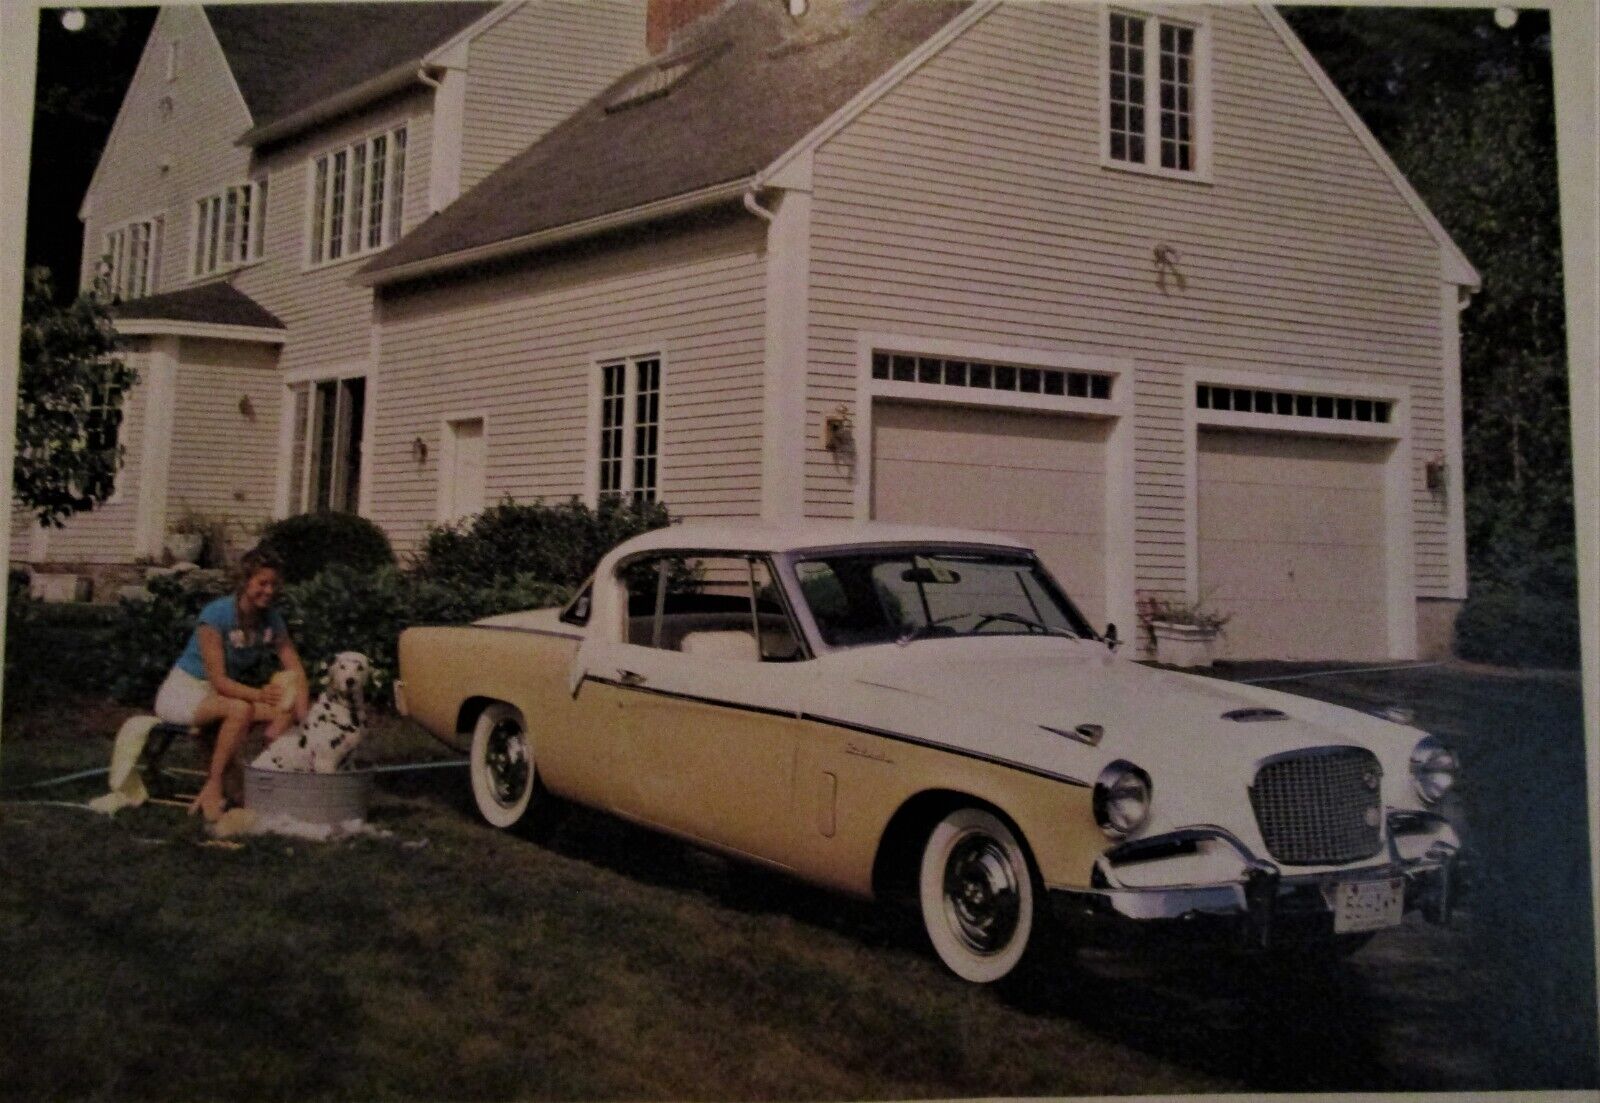 1956 Studebaker Skyhawk 2 dr ht car print (yellow & white)